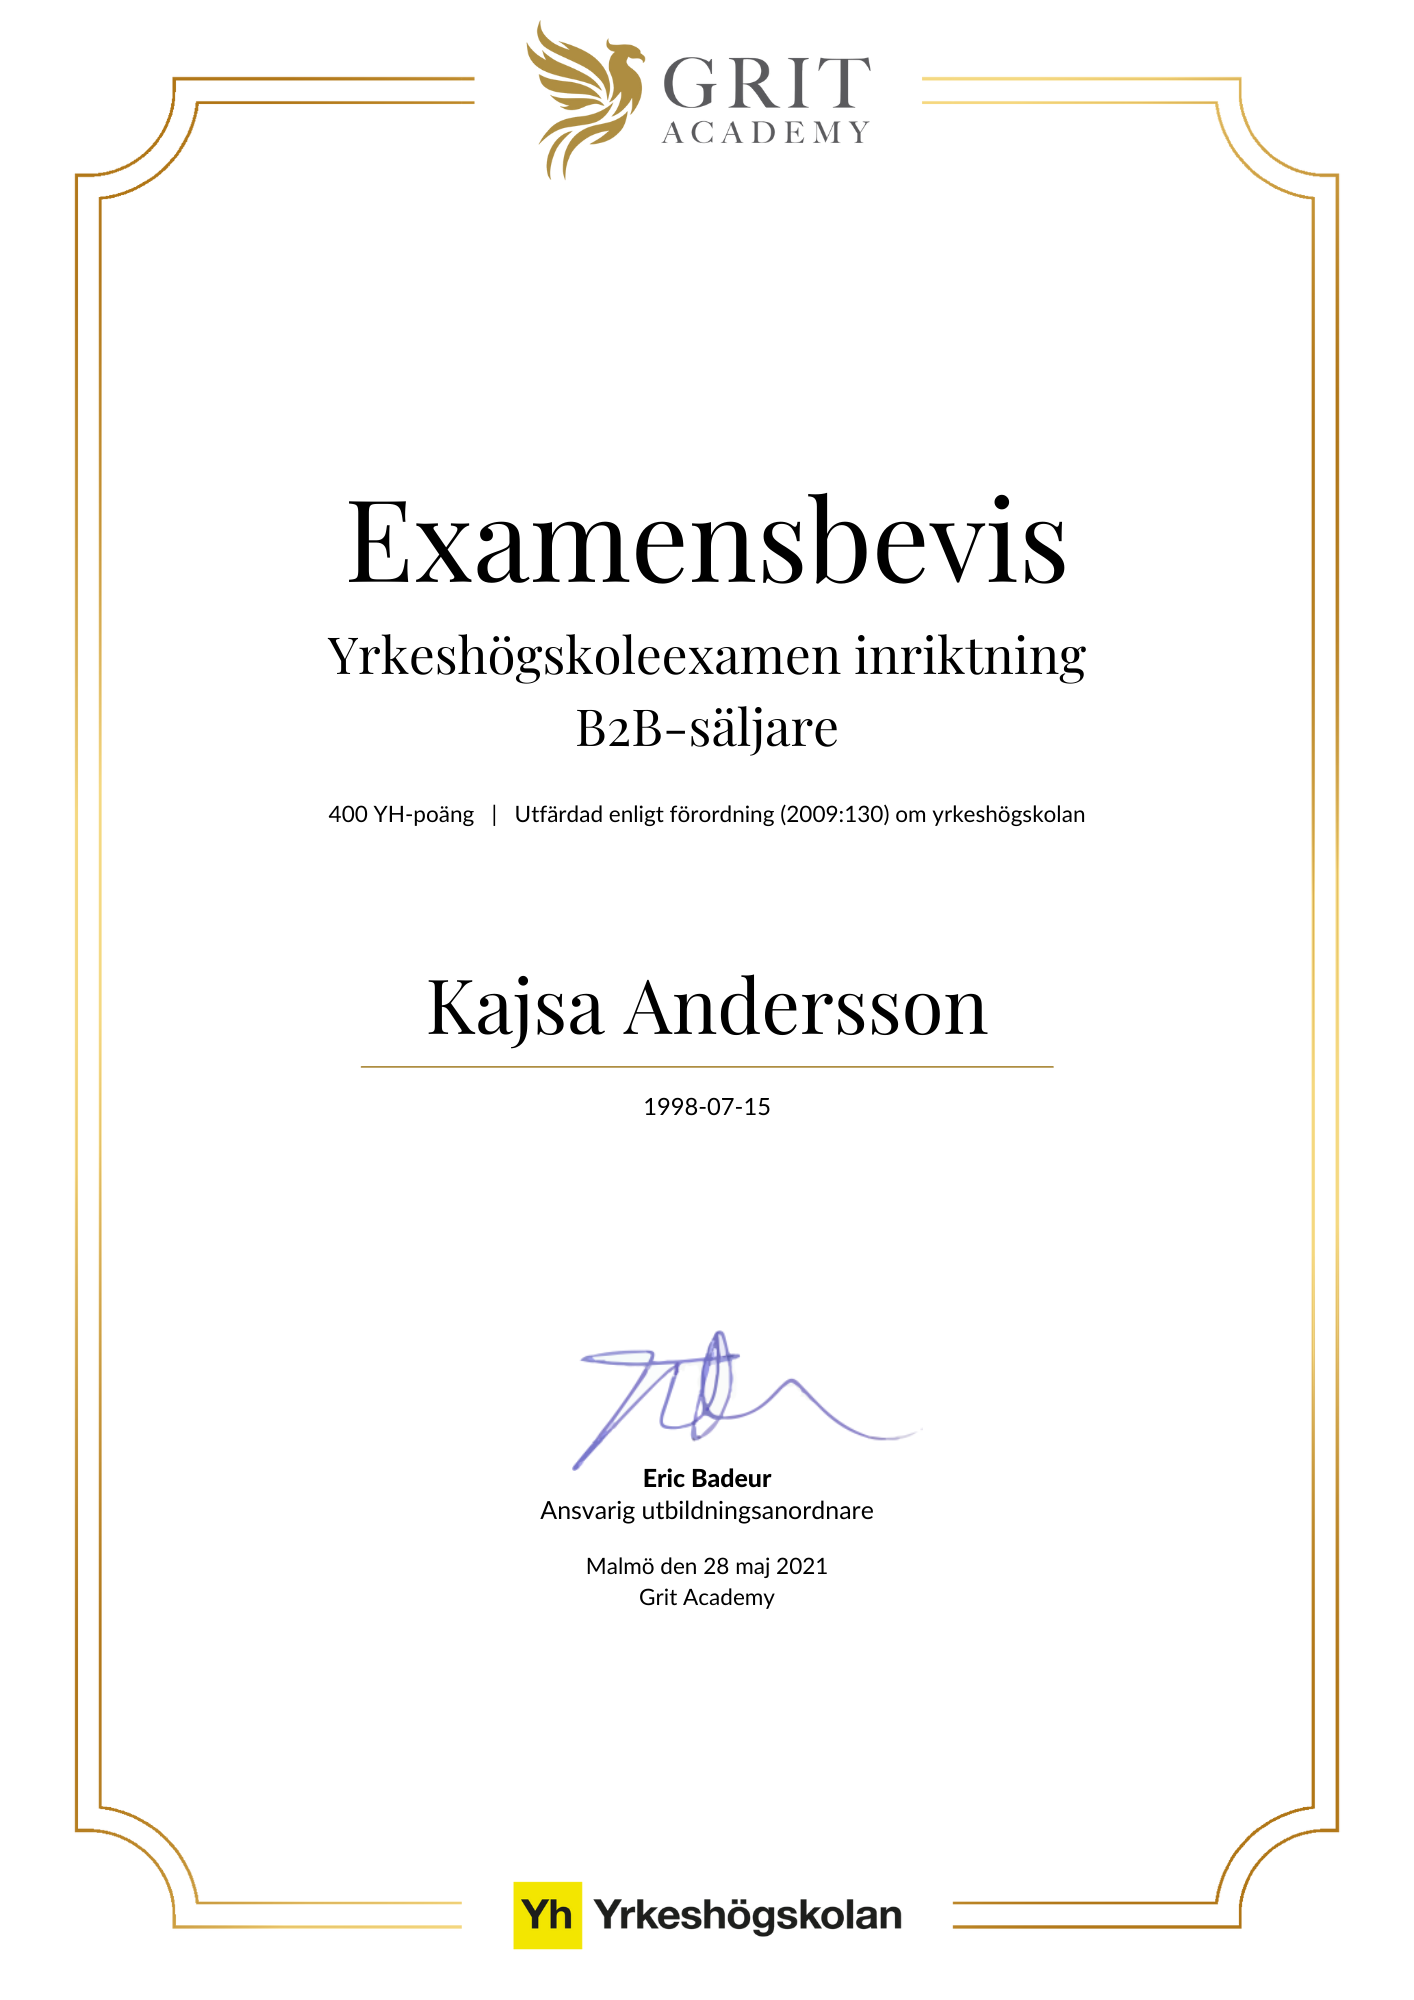 Examensbevis Kajsa Andersson - 1